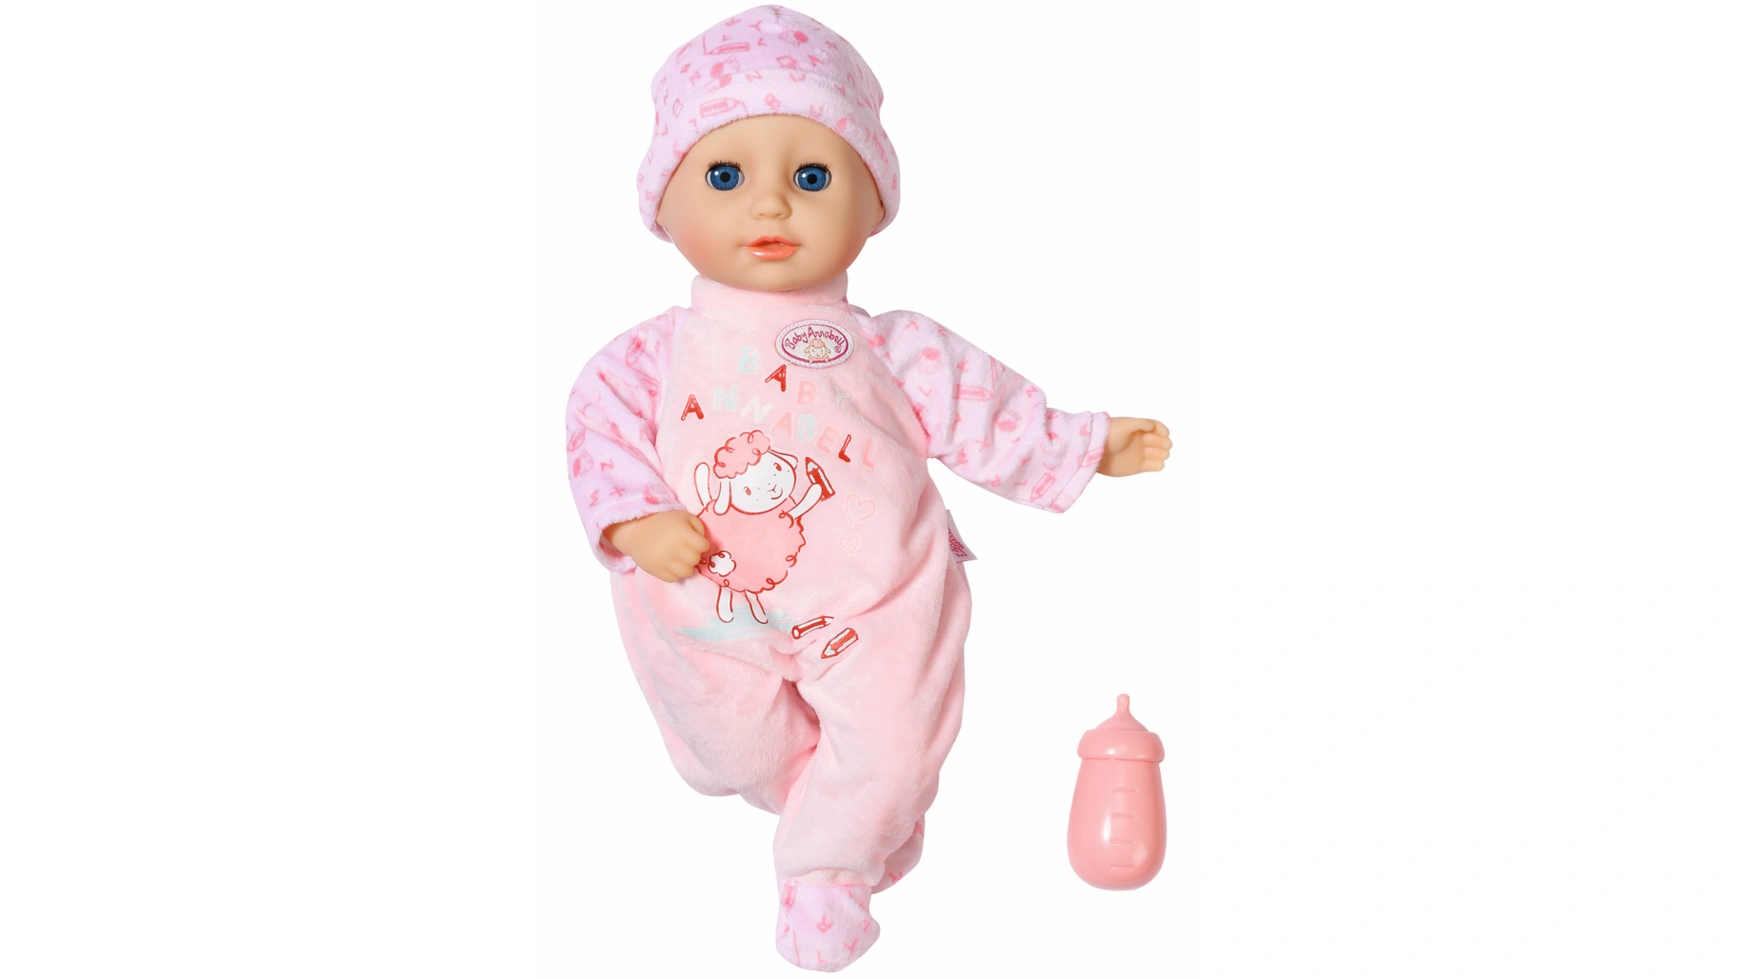 Zapf Creation Baby Annabell Little Annabell 36см, игровая кукла одежда для кукол zapf creation baby annabell делюкс с пайетками 703229